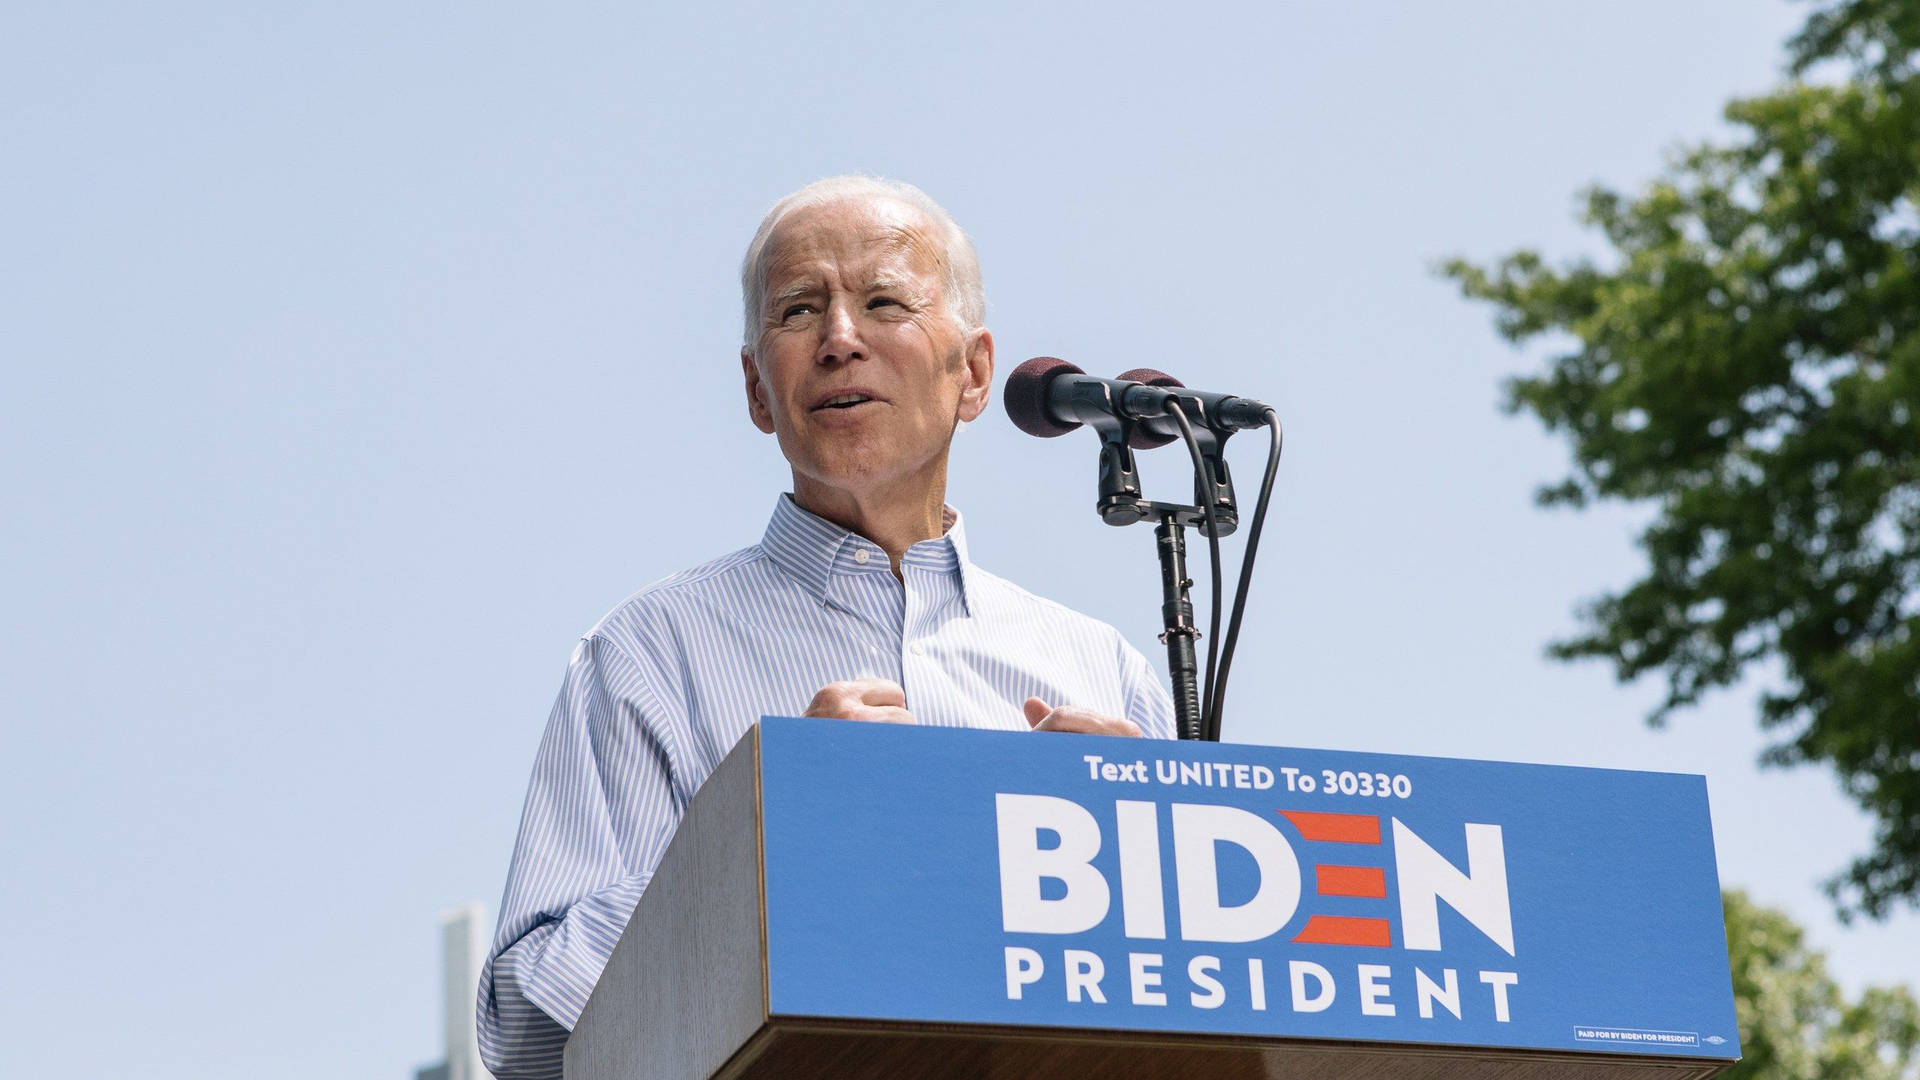 Joe Biden Giving Speech On Stage